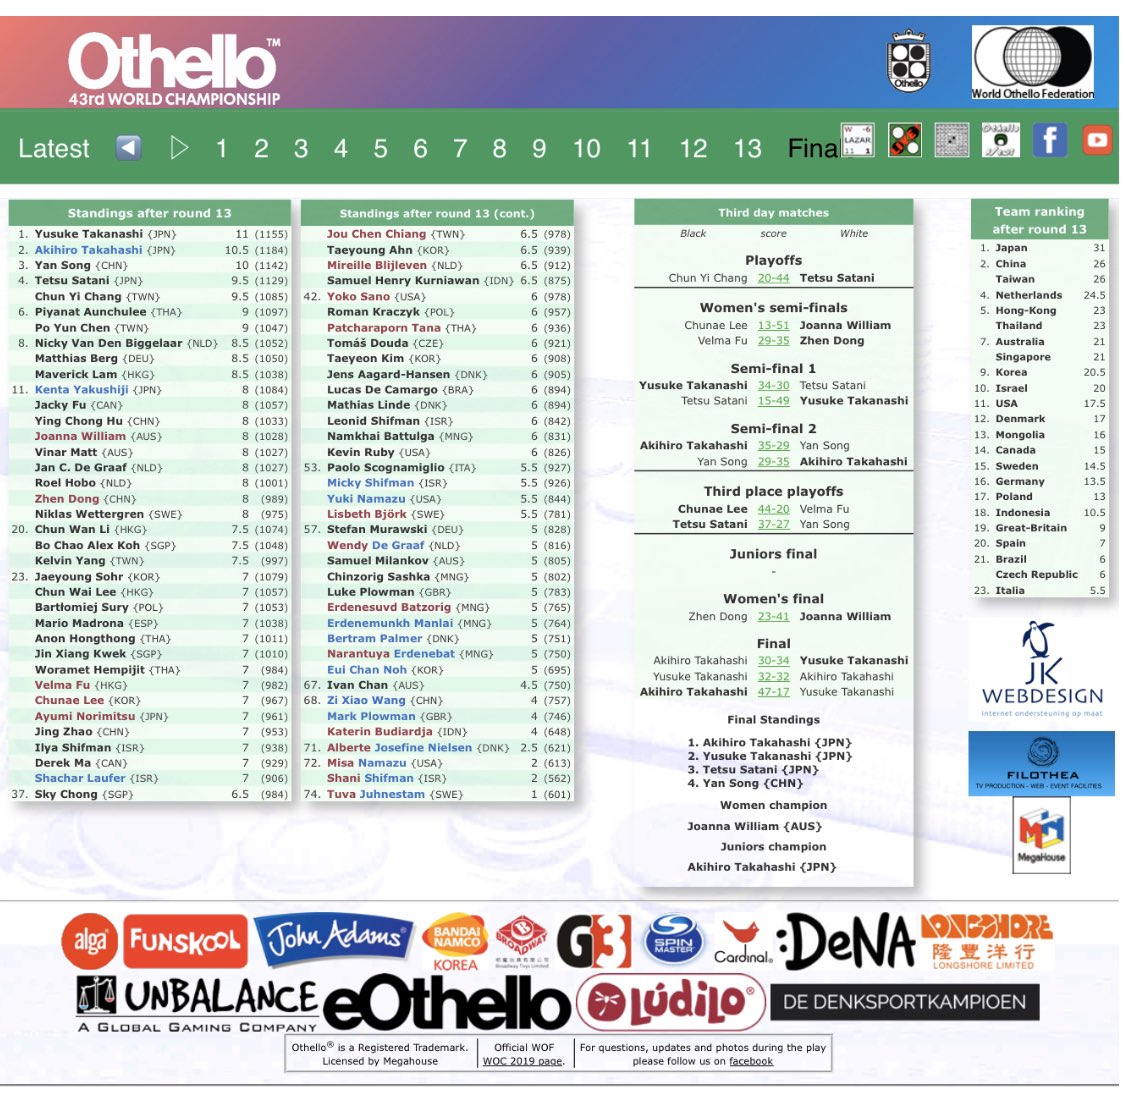 Congratulations to Takahashi Akihiro for achieving the 43rd World Othello Championship! ⚫️⚪️🏆

Also congratulations to all for the amazing performance!

#Othello #オセロ #WOC19 #eOthello